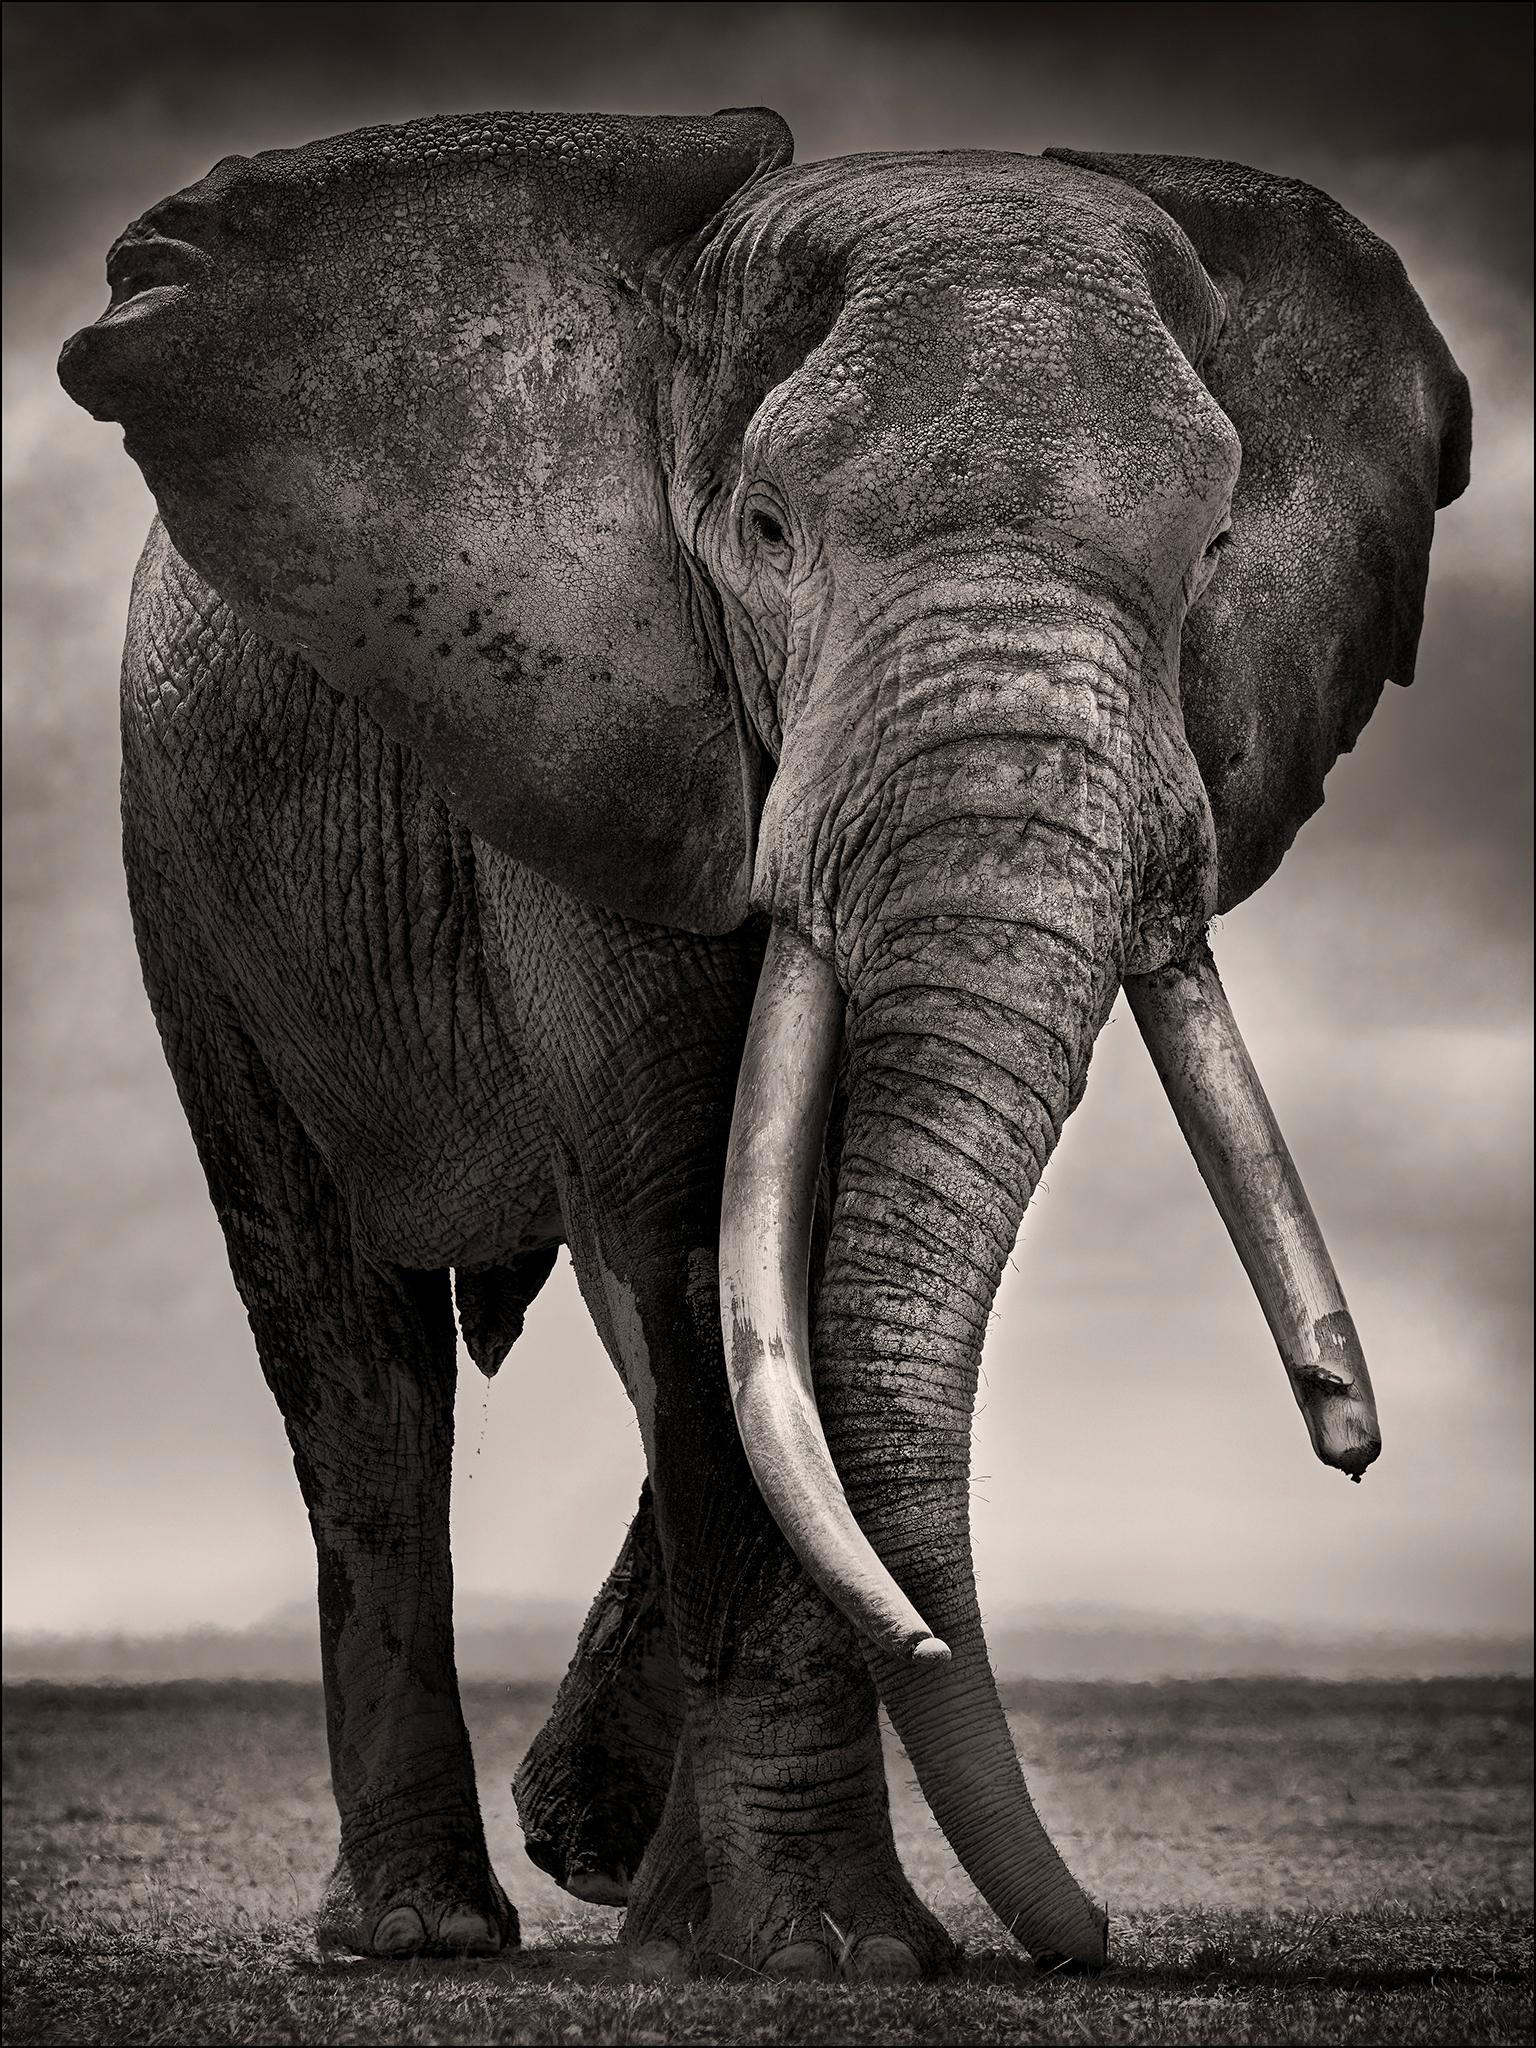 Joachim Schmeisser Black and White Photograph - Primo, Kenya, animal, wildlife, black and white photography, elephant